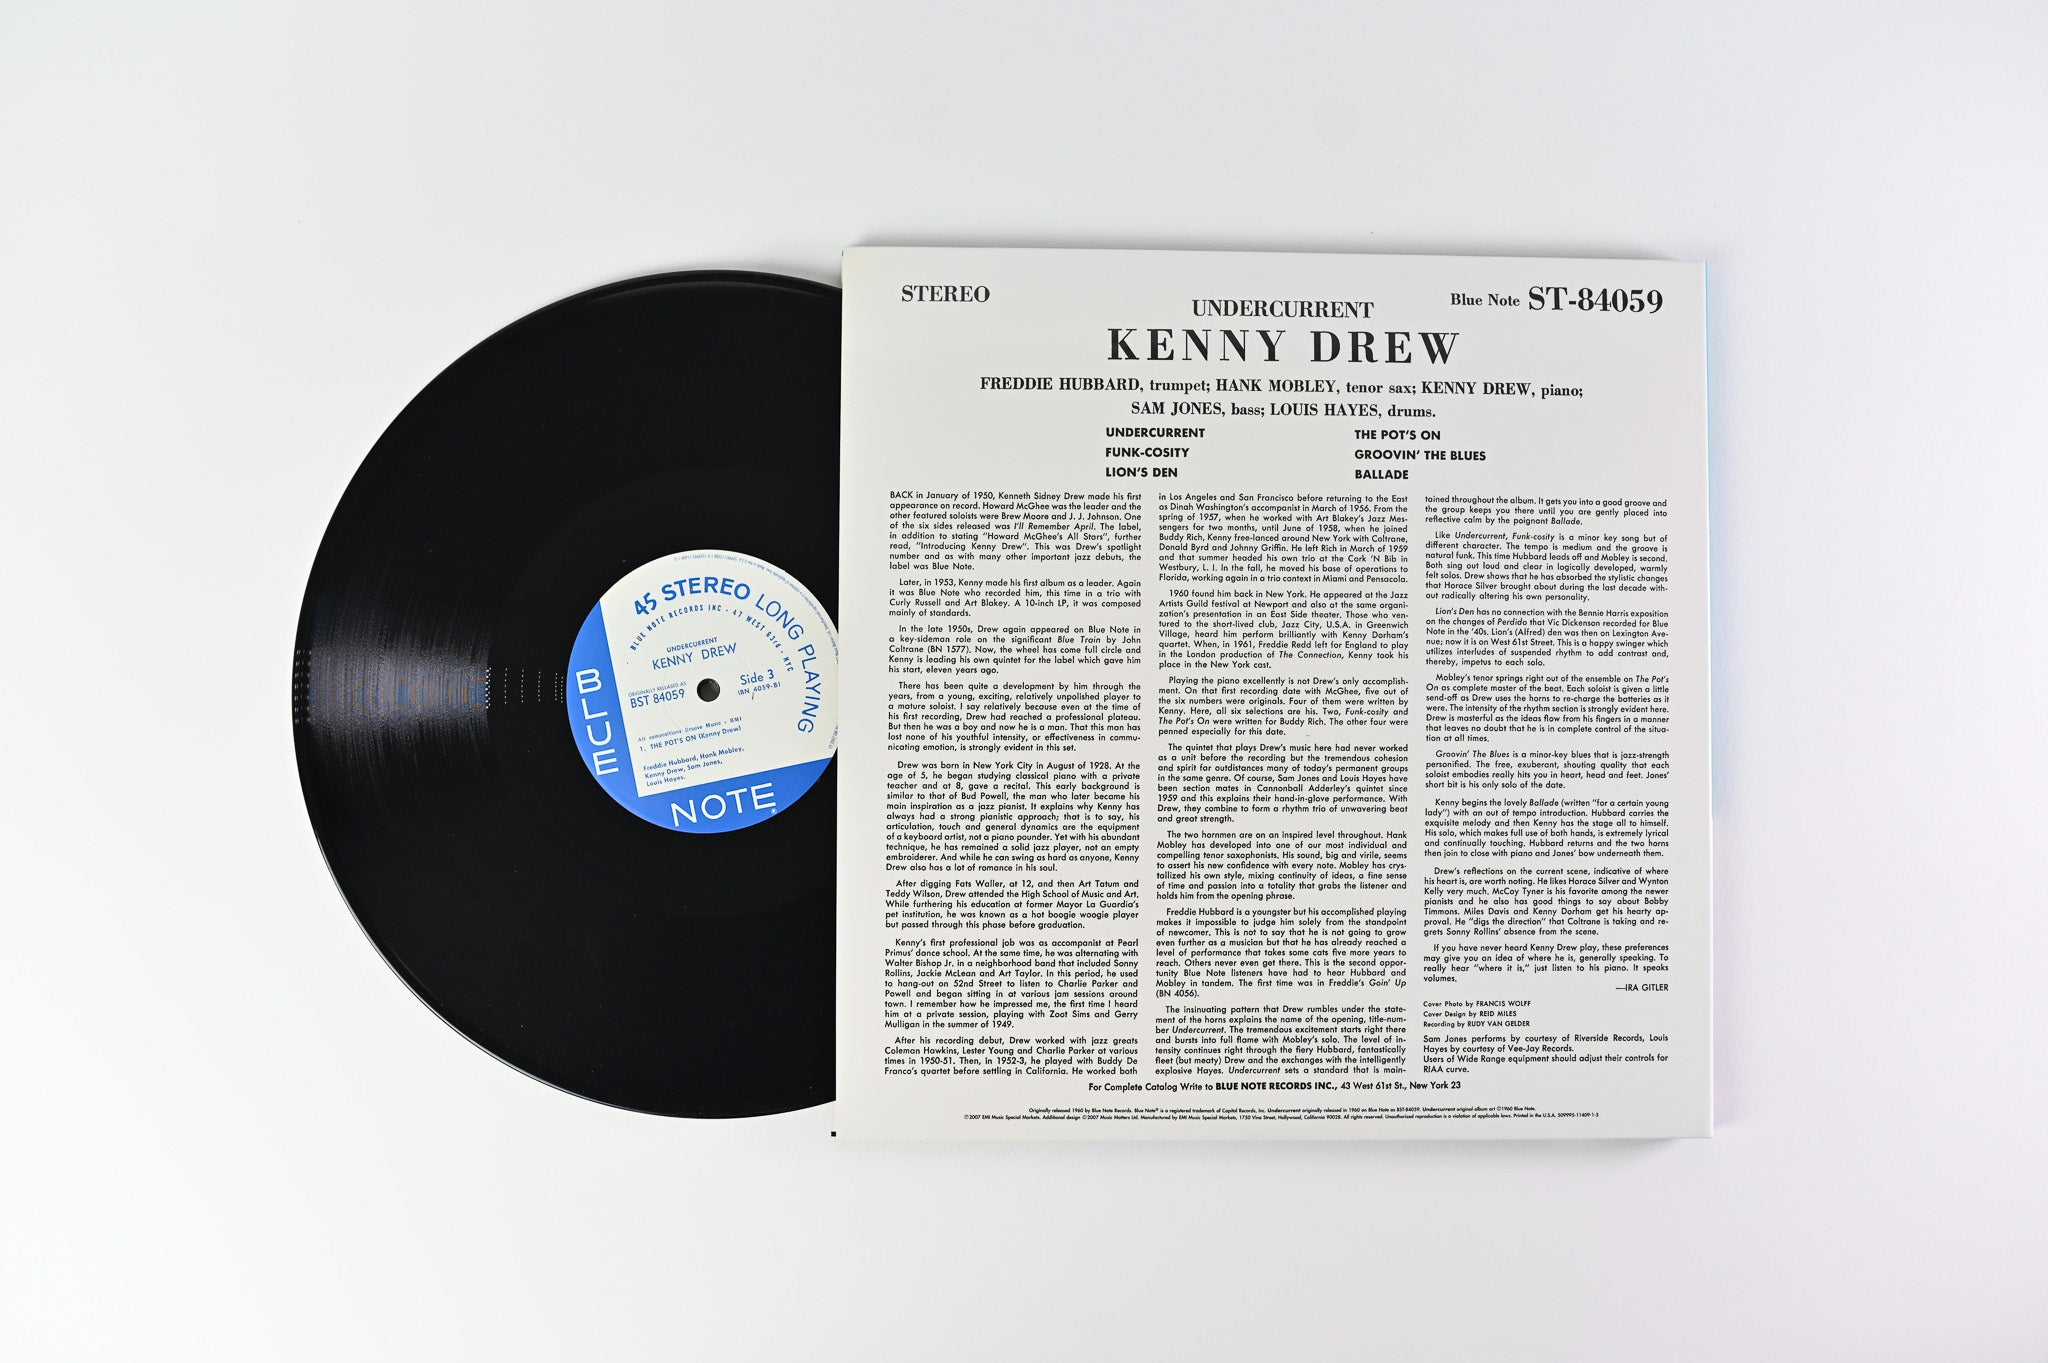 Kenny Drew - Undercurrent on Blue Note Music Matters Ltd 45 RPM Reissue